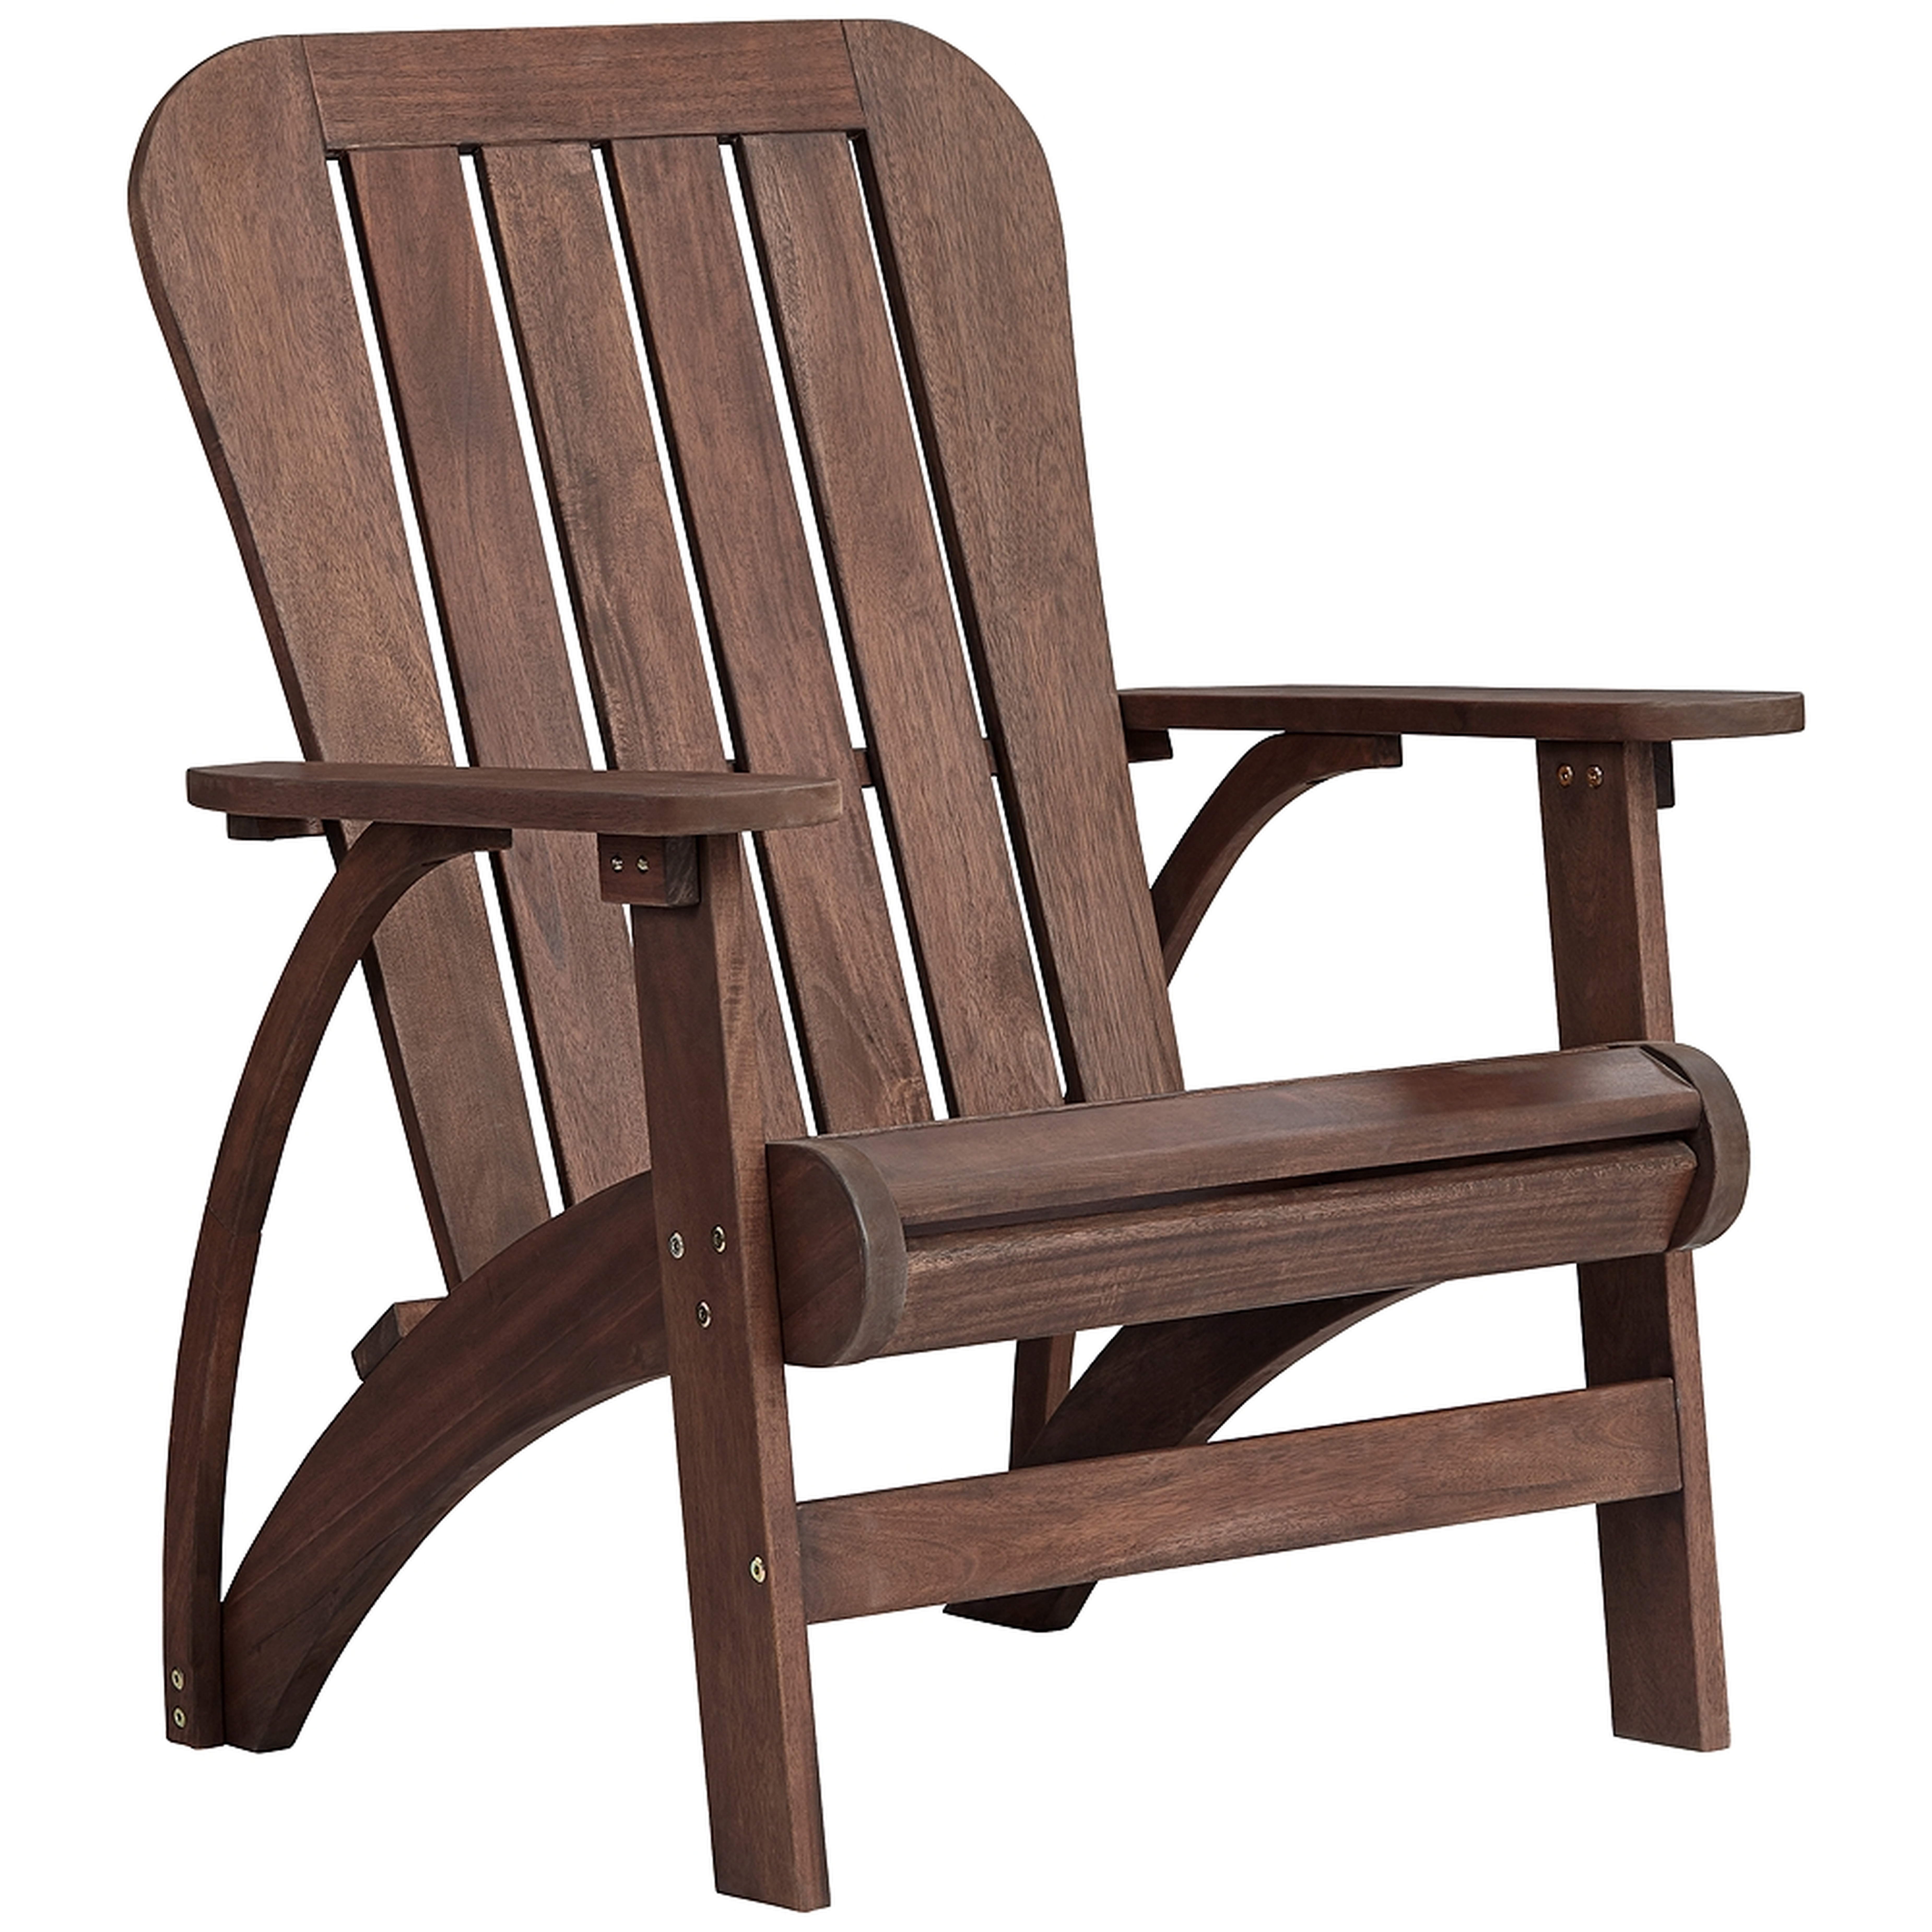 Dylan Acacia Dark Wood Adirondack Chair - Style # 68X03 - Lamps Plus